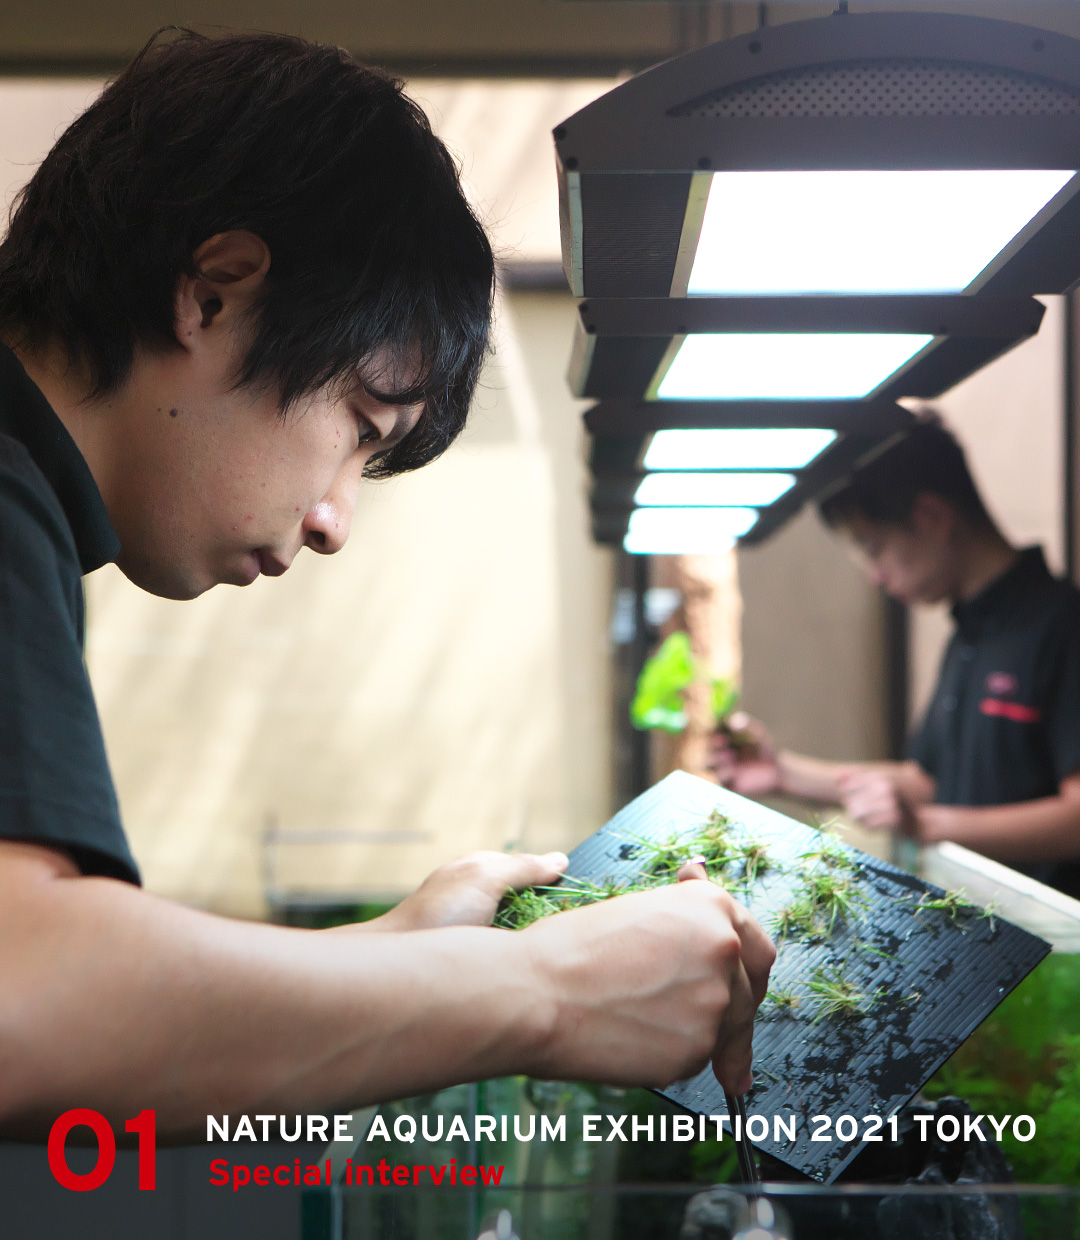 NATURE AQUARIUM EXHIBITION 2021 TOKYO Special interview: Naru Uchida & Daichi Araki